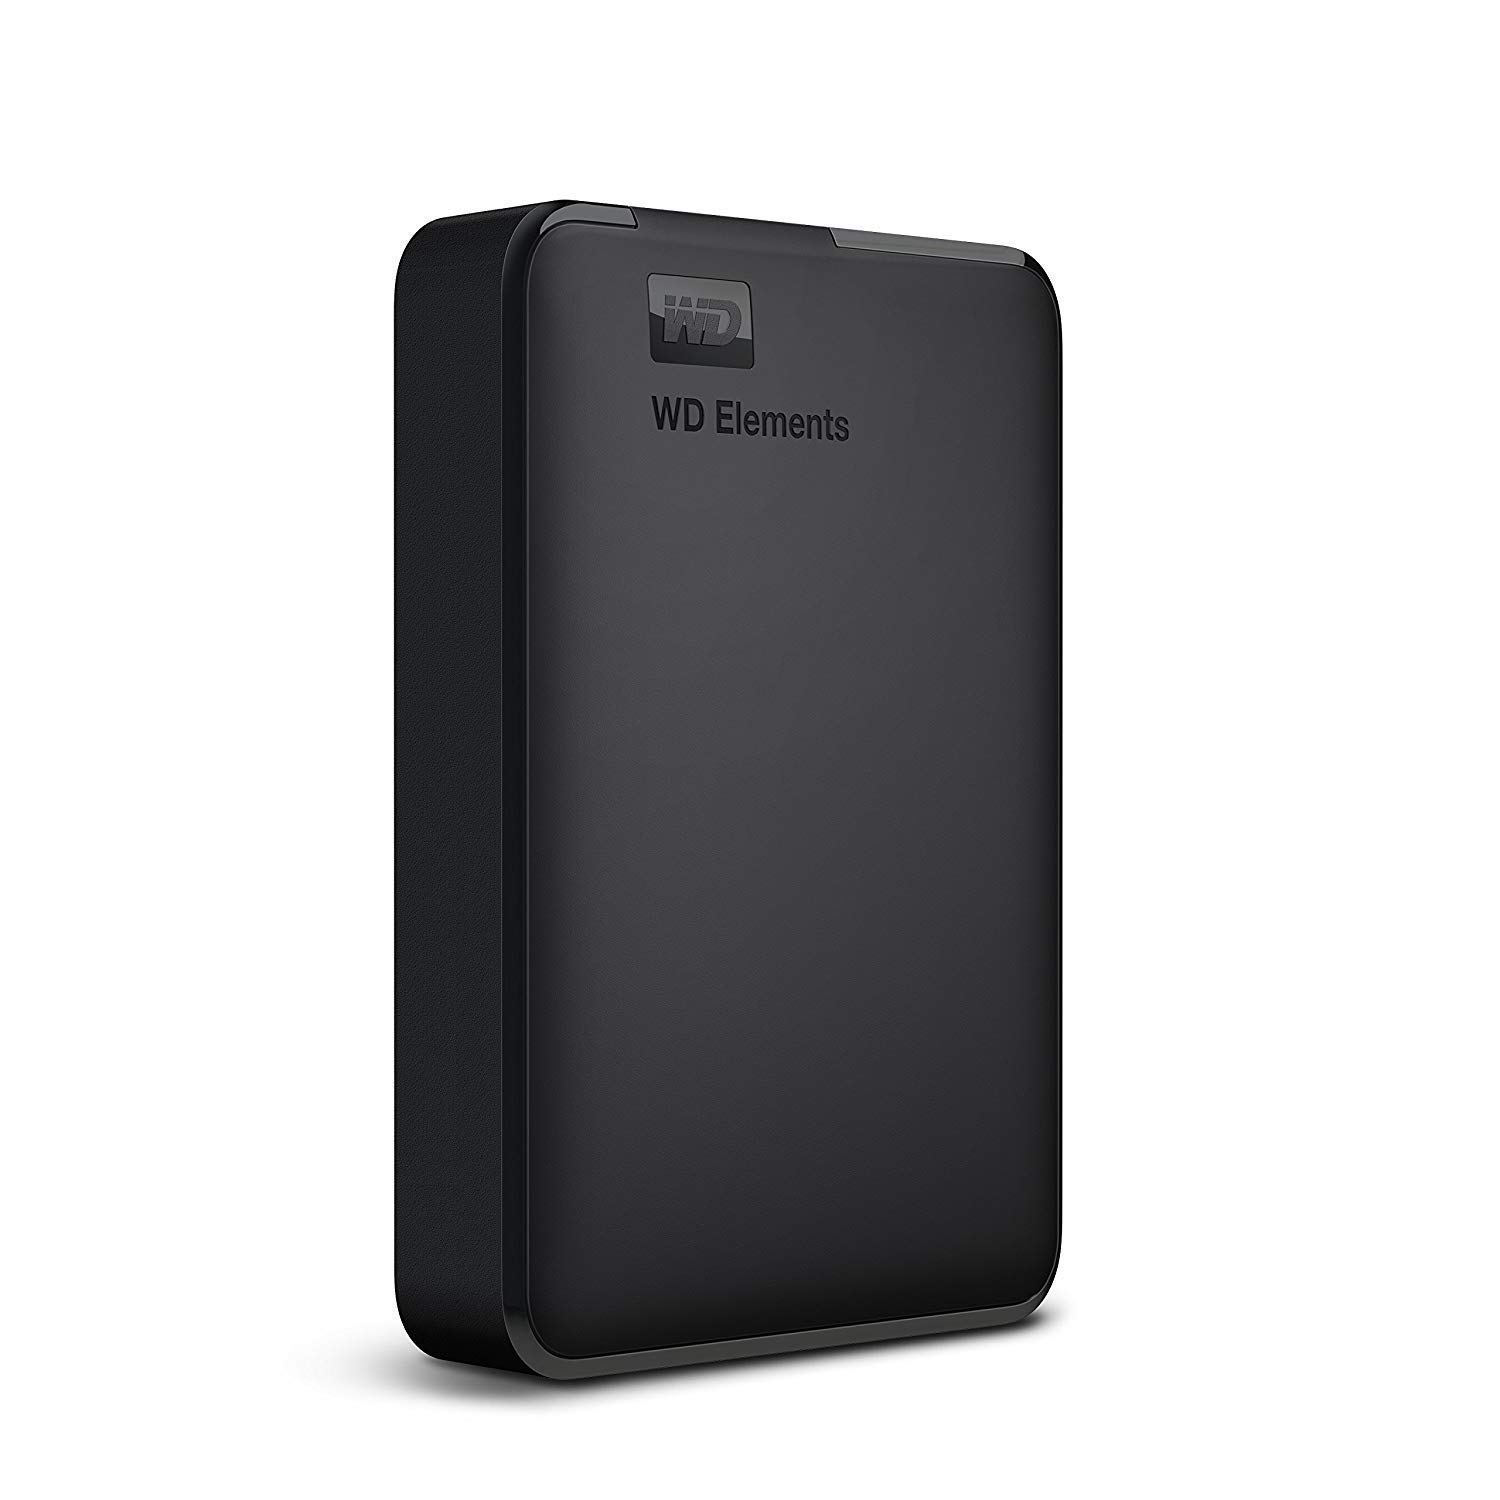 WD 8TB My Book Desktop External Hard Drive, USB 3.0 - WDBBGB0080HBK-NESN, Black & 4TB WD Elements Portable External Hard Drive, USB 3.0 - WDBU6Y0040BBK-WESN